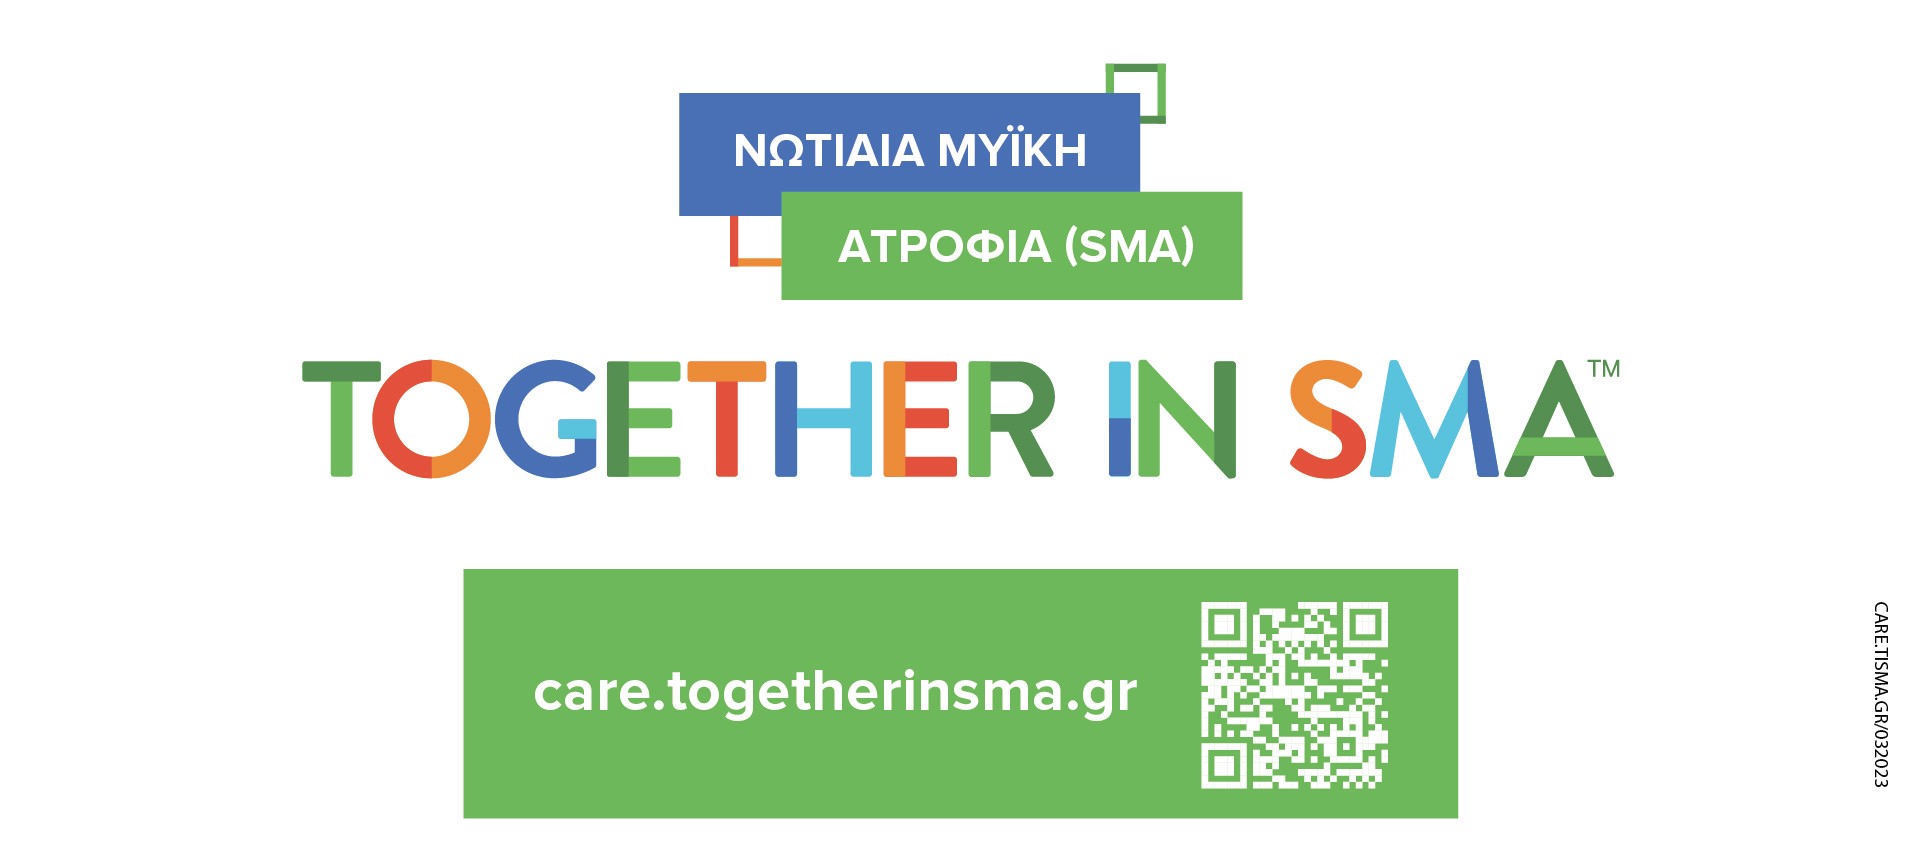 GENESIS Pharma: Πλατφόρμα ενημέρωσης για τη Νωτιαία Μυϊκή Ατροφία (SMA) στα ελληνικά